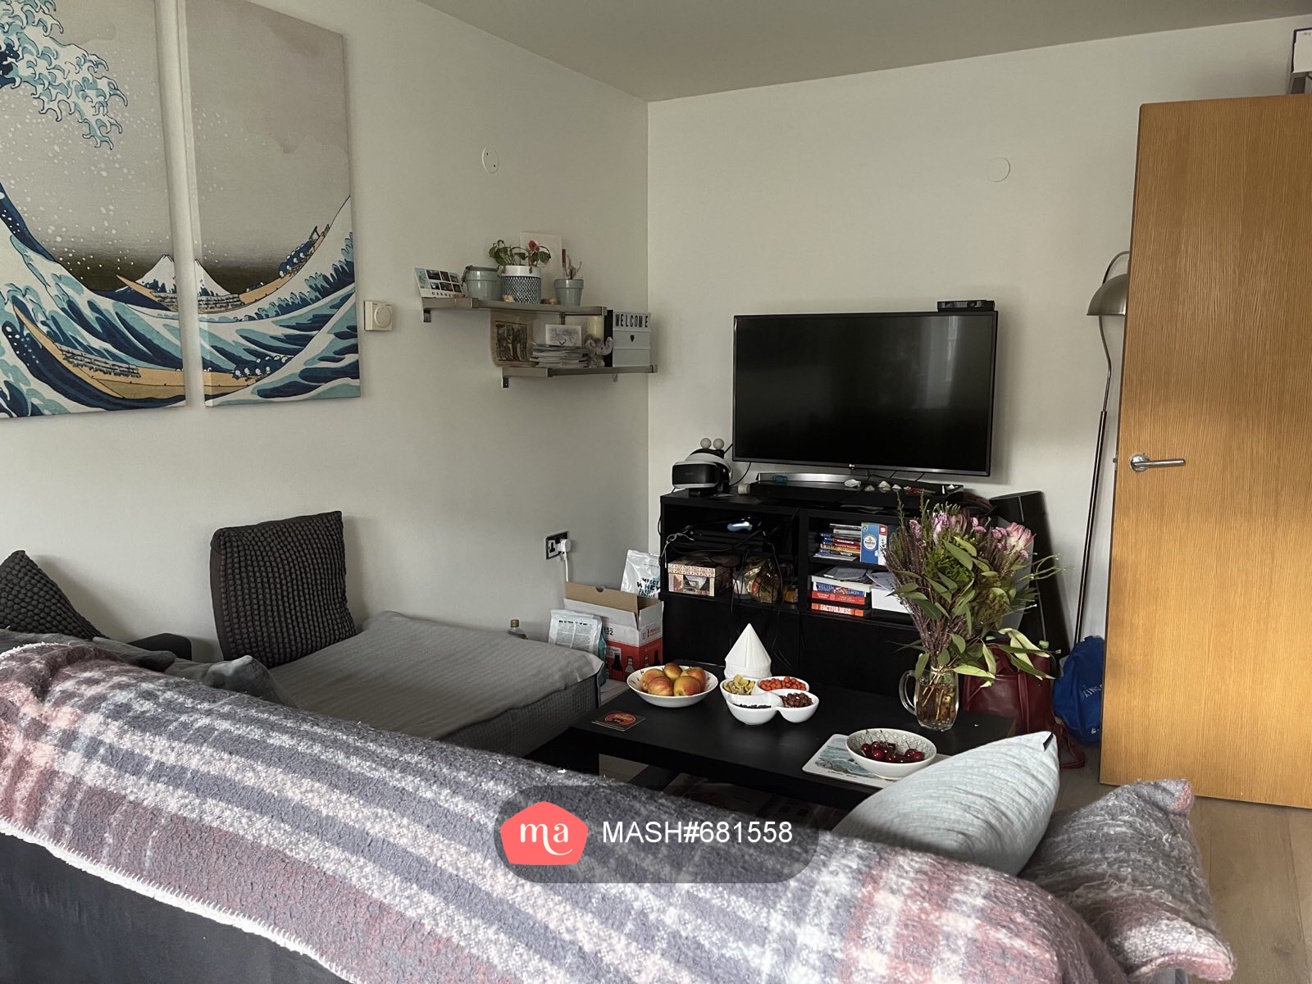 2 Bedroom Flat to rent in Romford - Mashroom